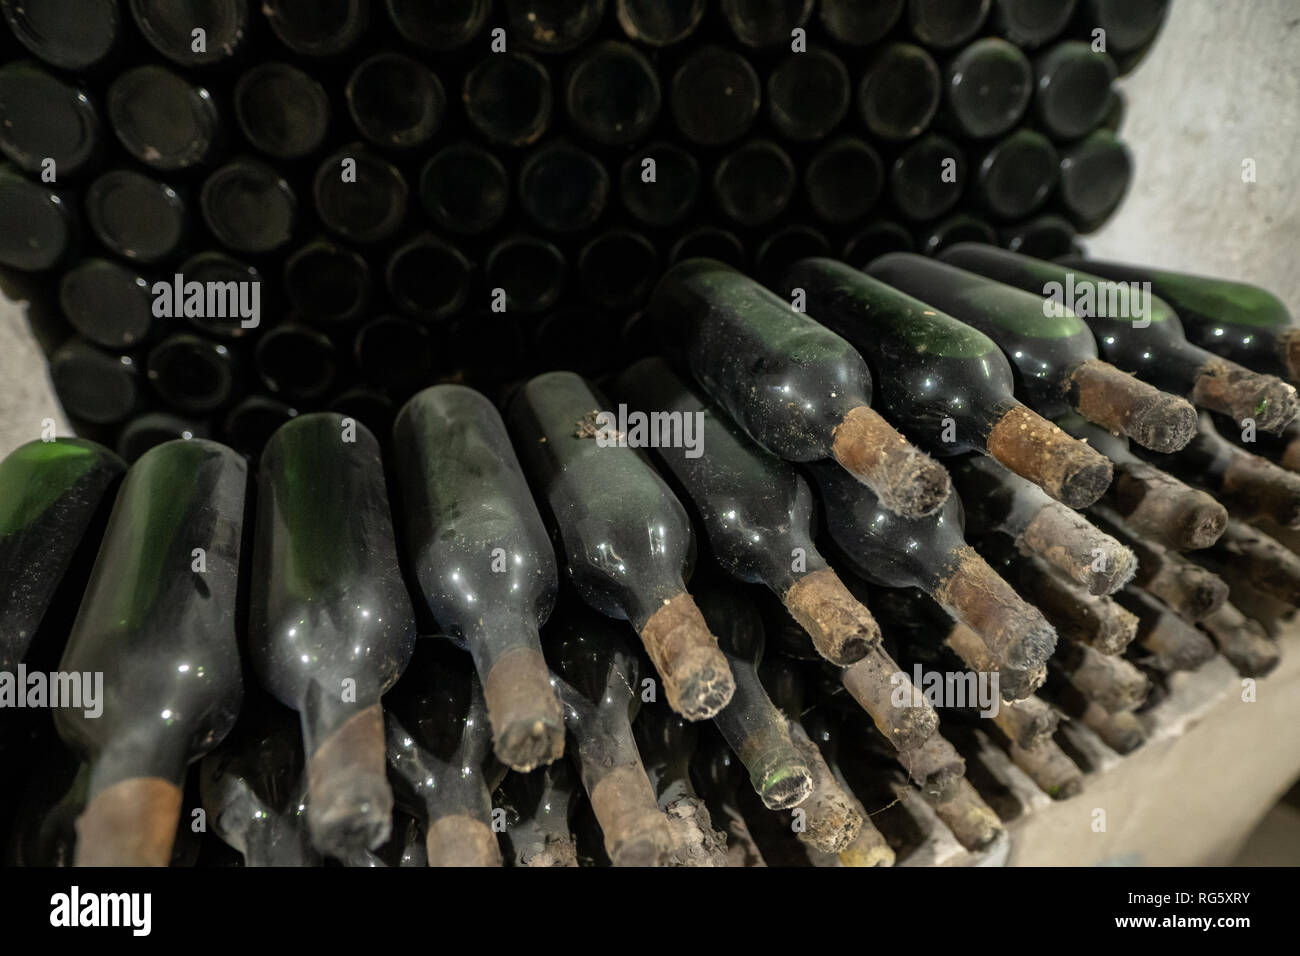 Dusty old wine bottles in an underground wine cellar Stock Photo